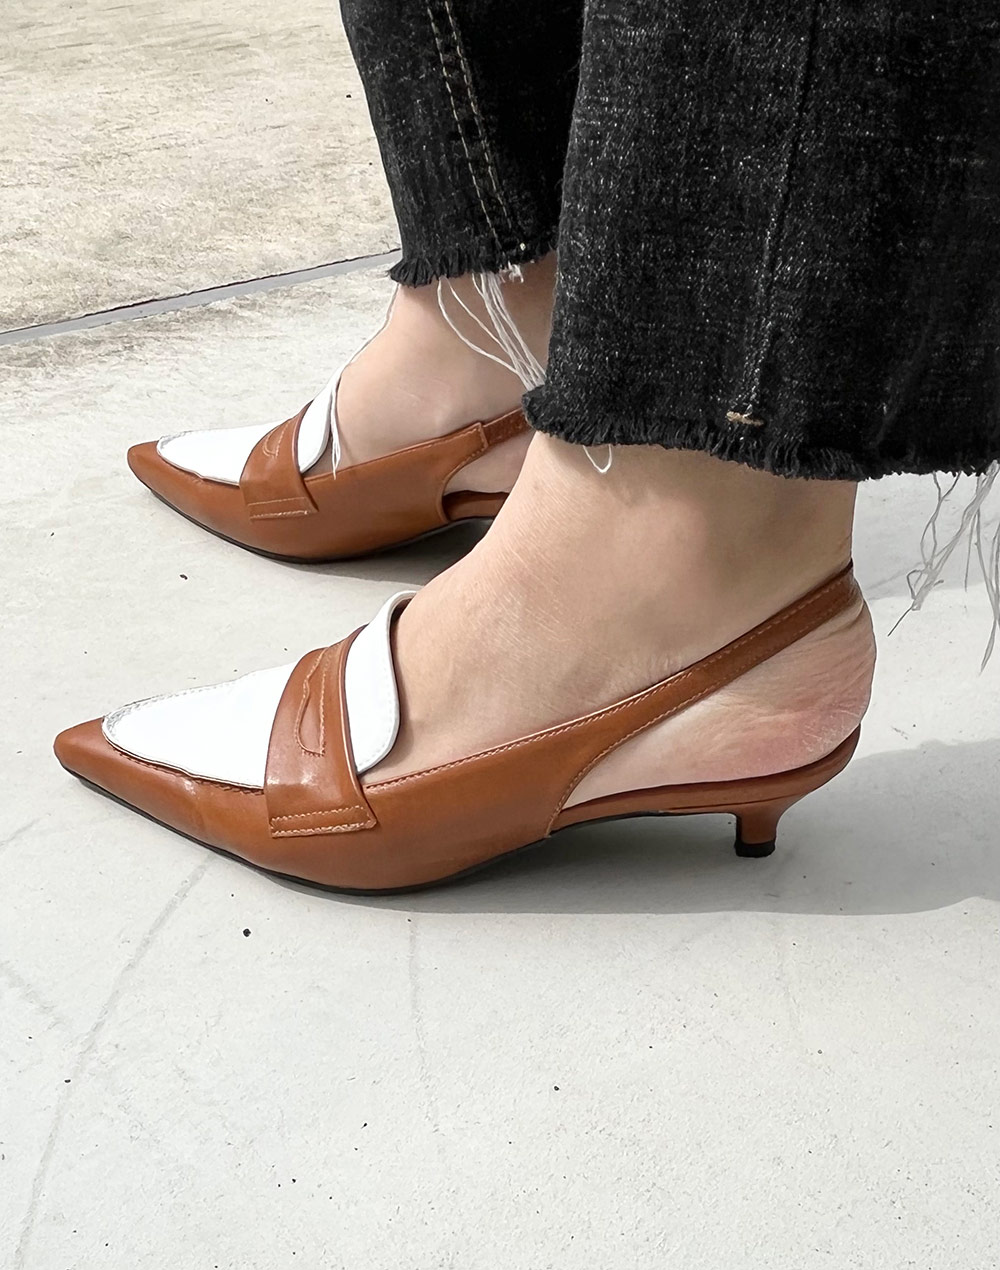 pin heel Loafer pumps・s278616（シューズ/ヒール）| 1016_kanako | 東京ガールズマーケット